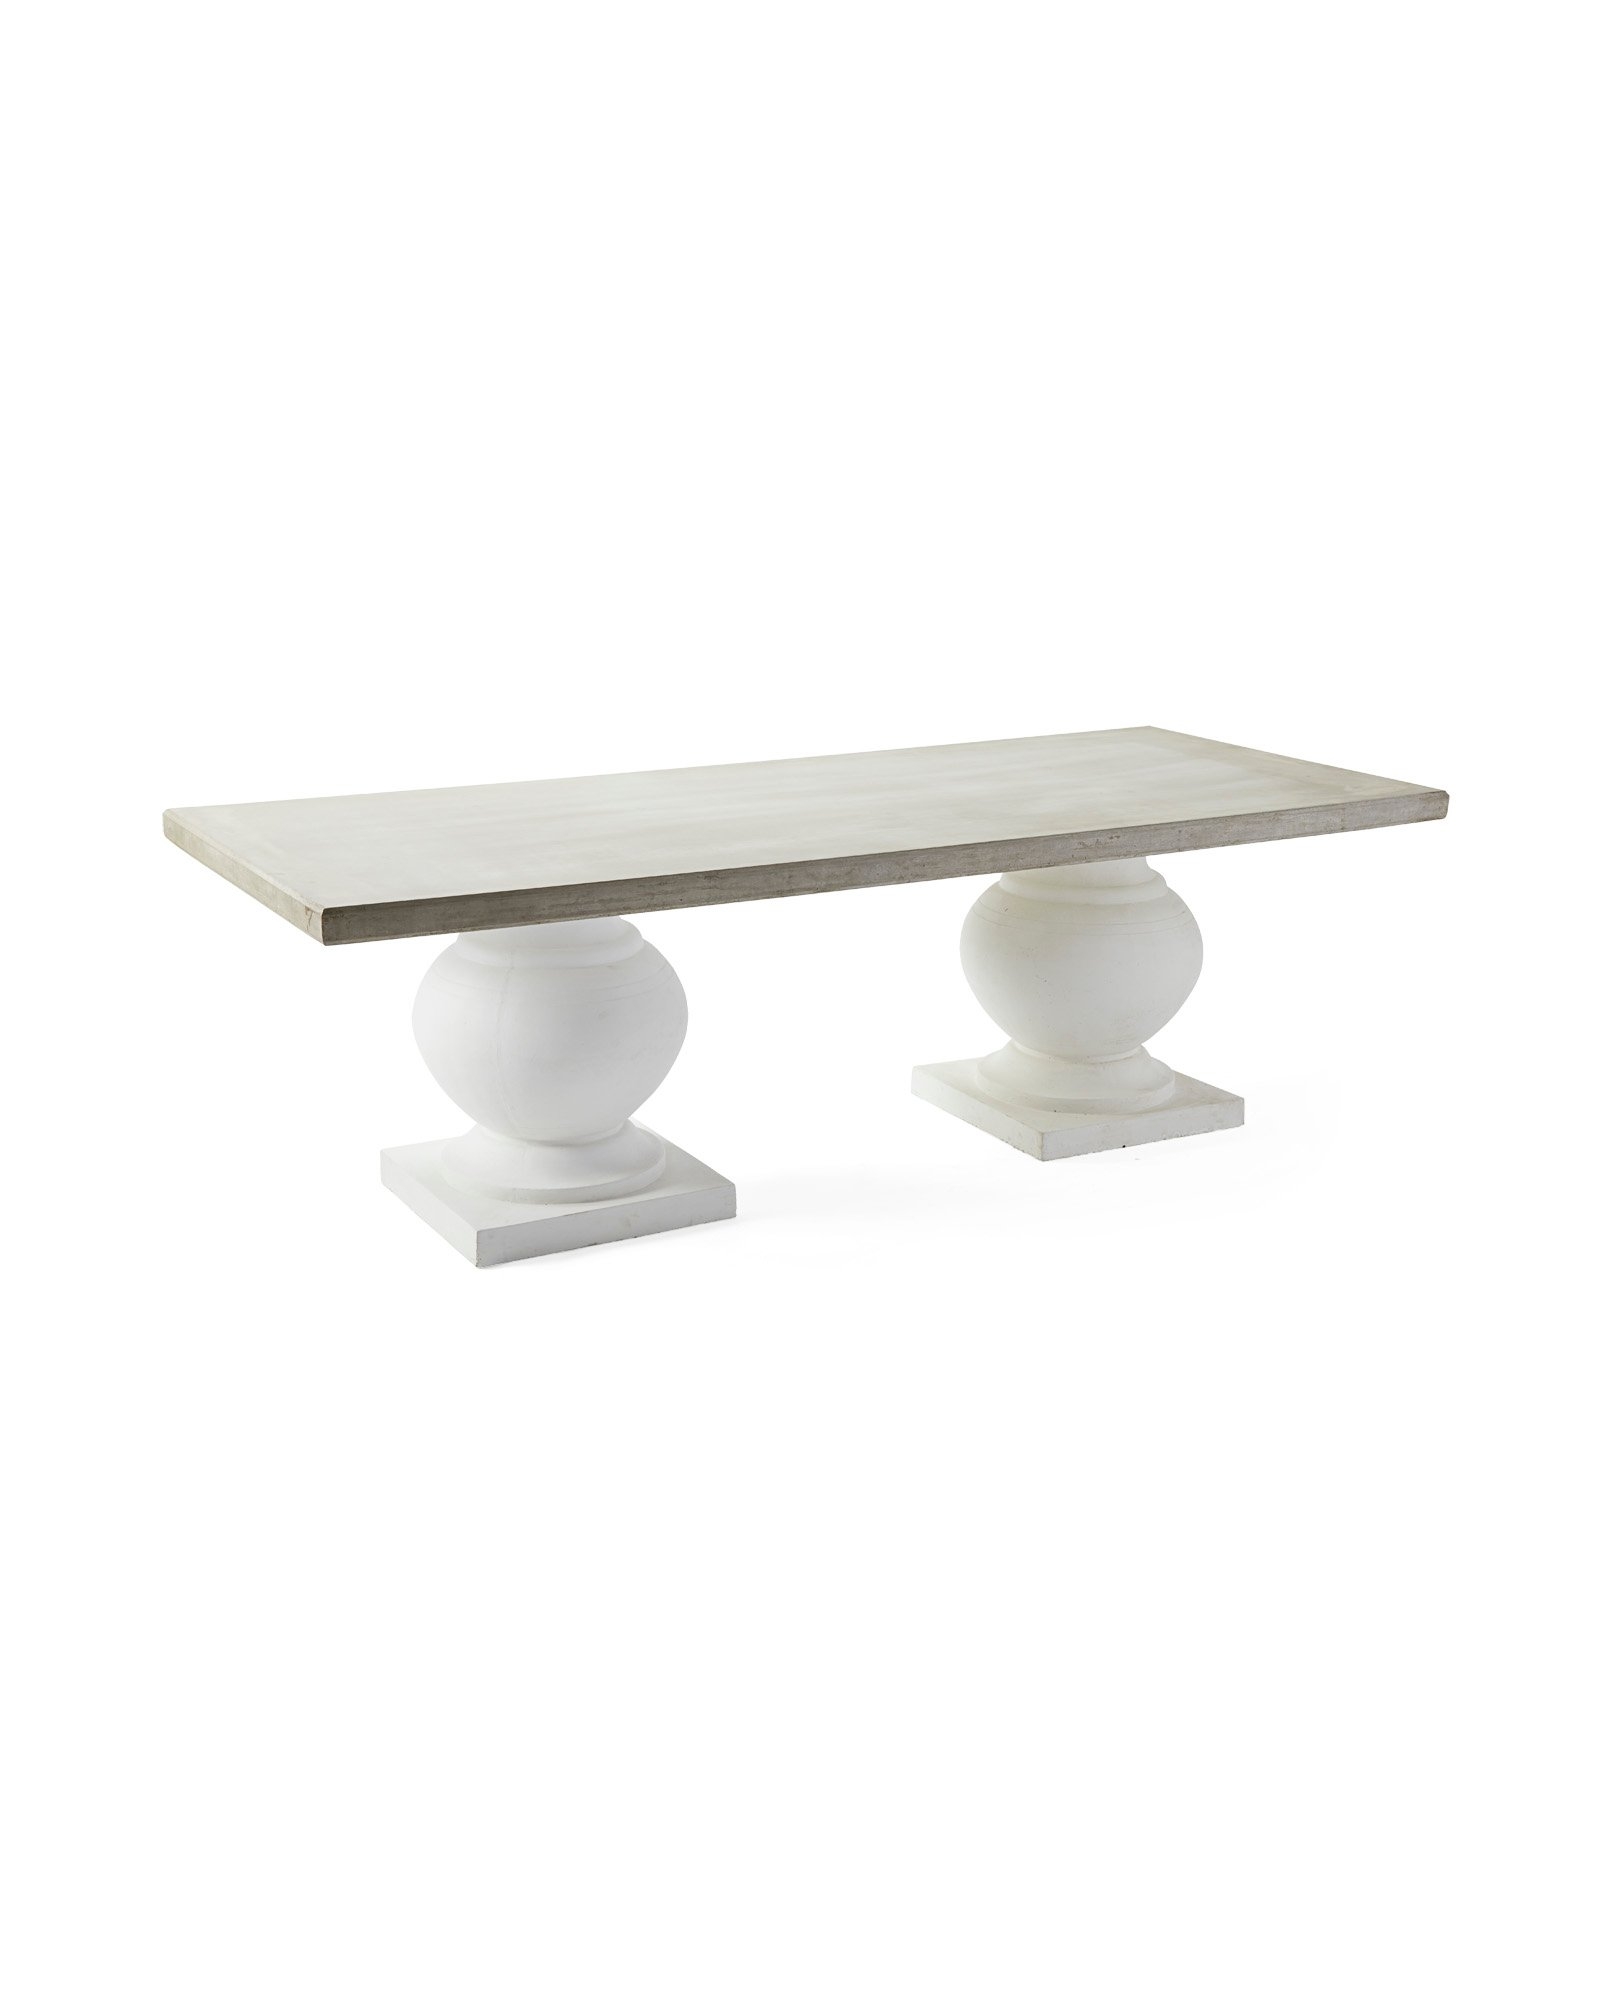 Terrace Dining Table - Fog/White - Image 4